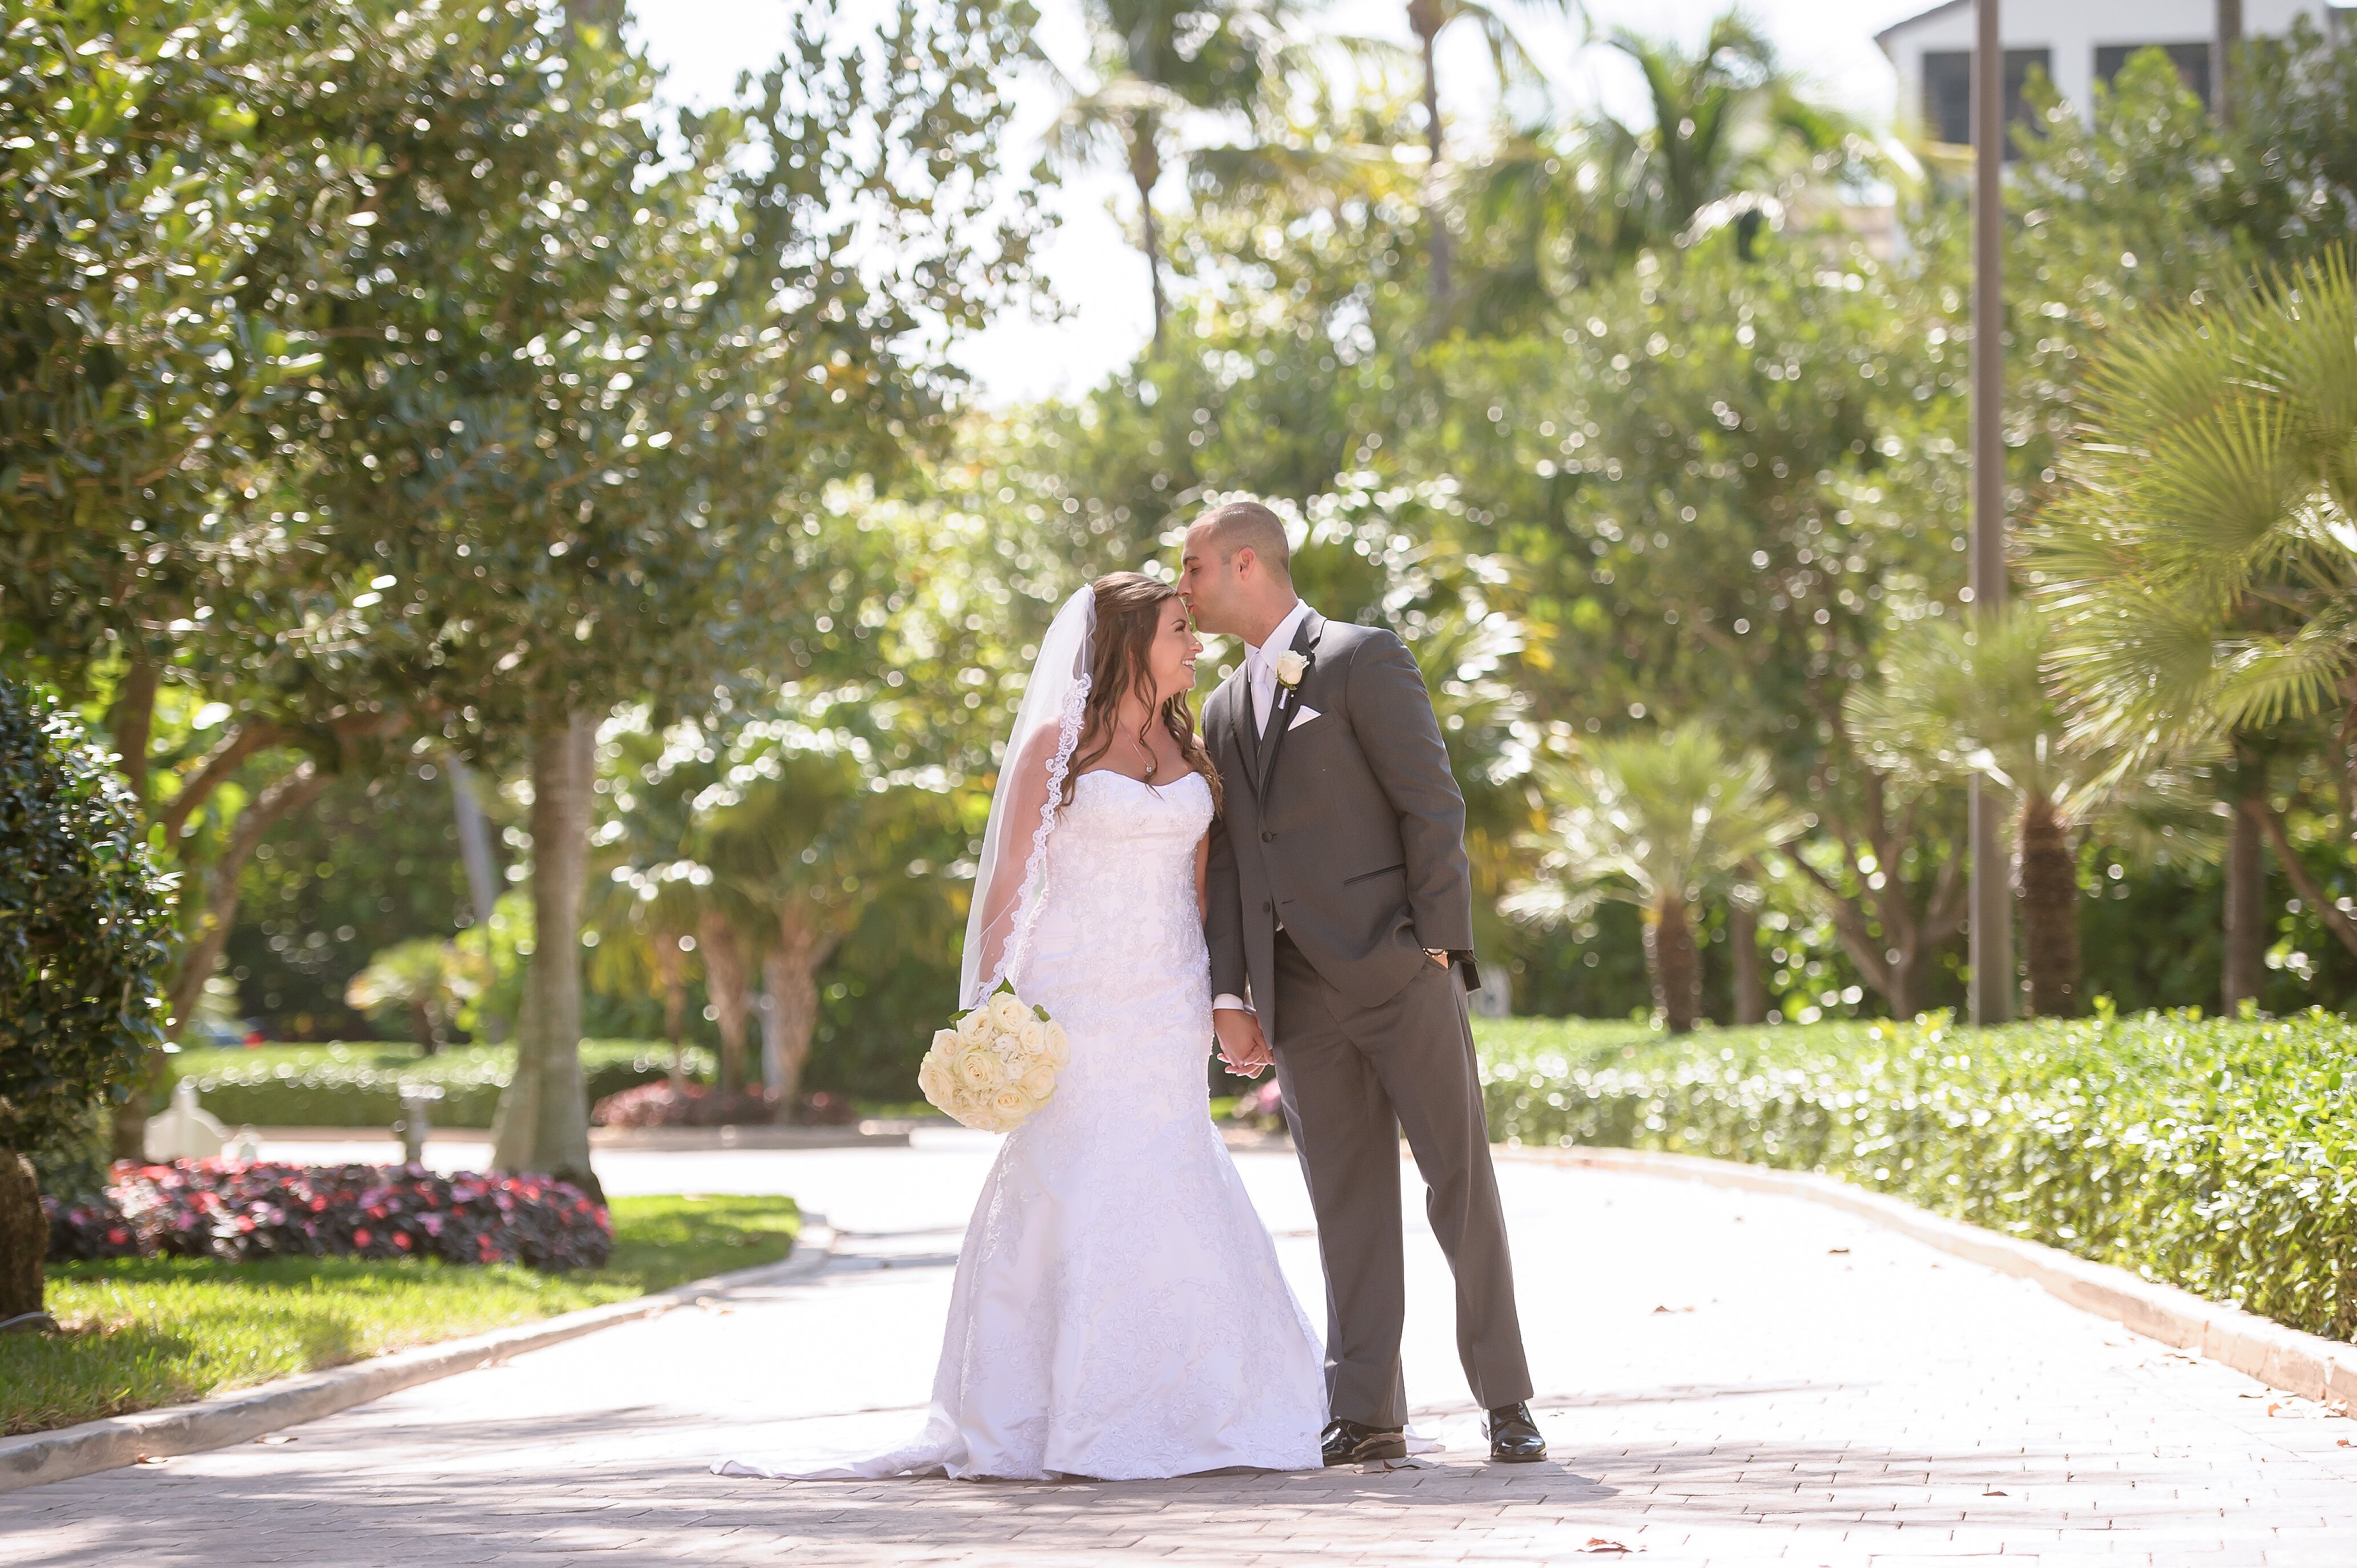 A Beach Themed Wedding At Jupiter Beach Resort And Spa In Jupiter Florida